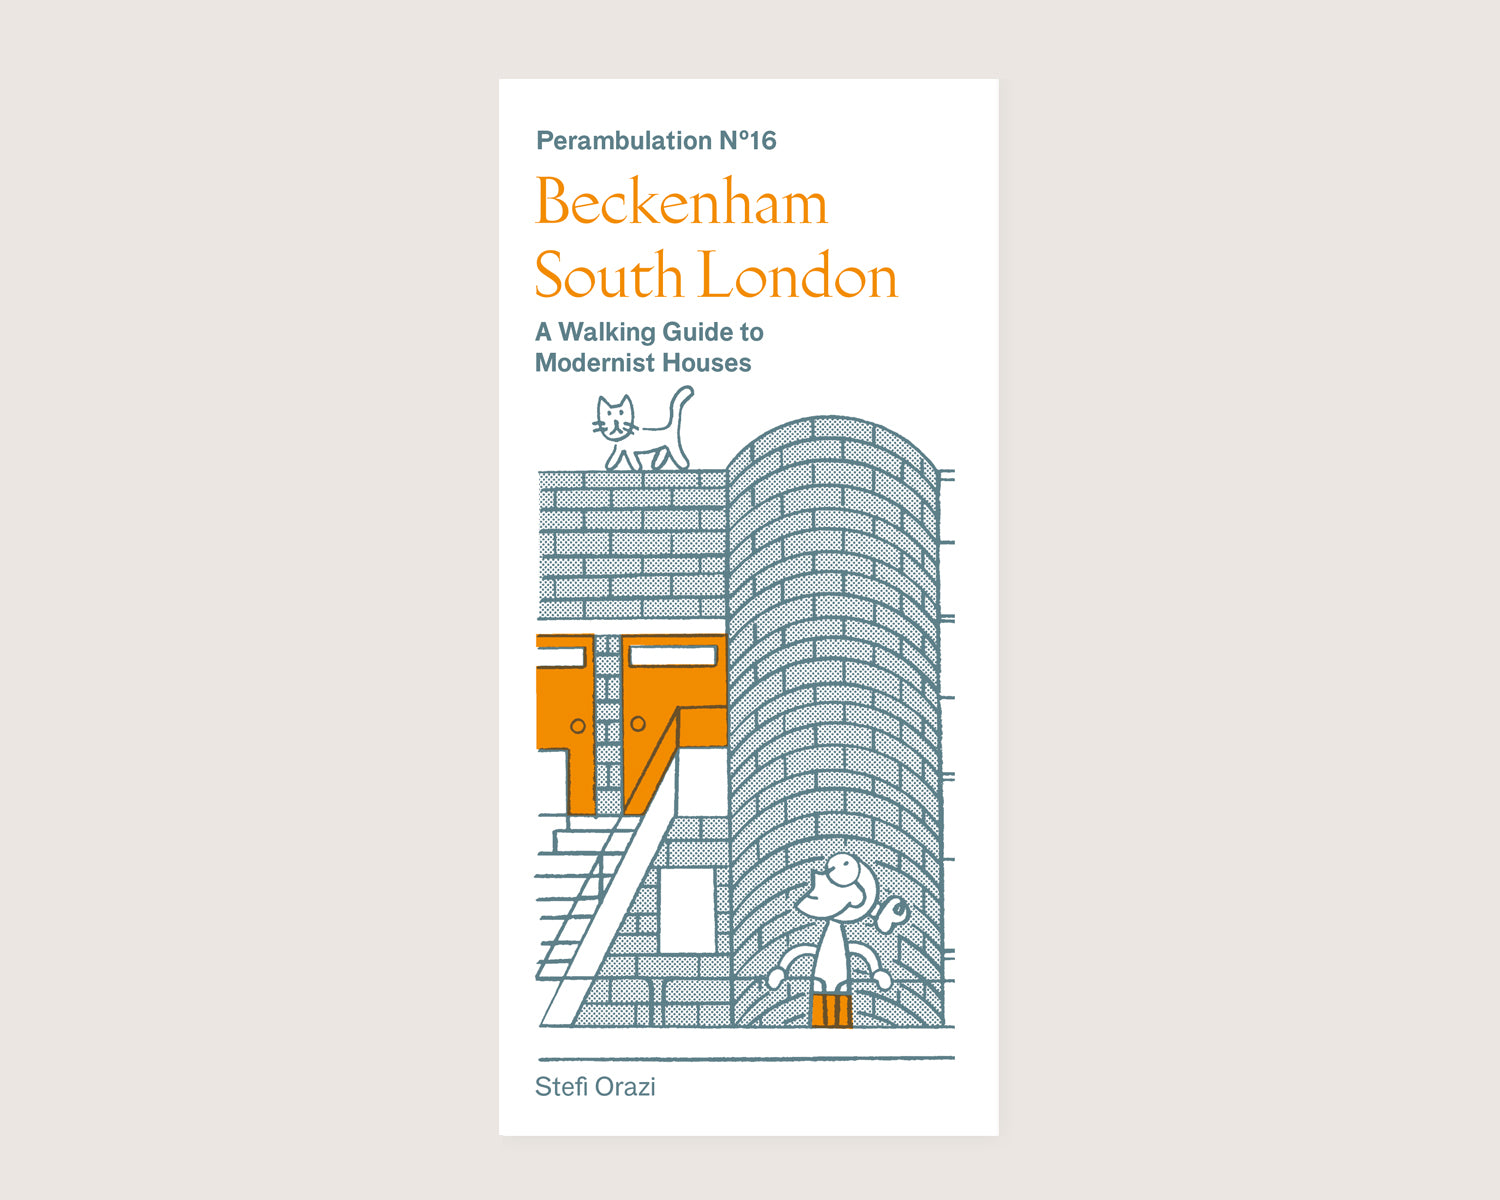 Perambulation Nº16—A Walking Guide to Modernist Houses in Beckenham, South London by Stefi Orazi